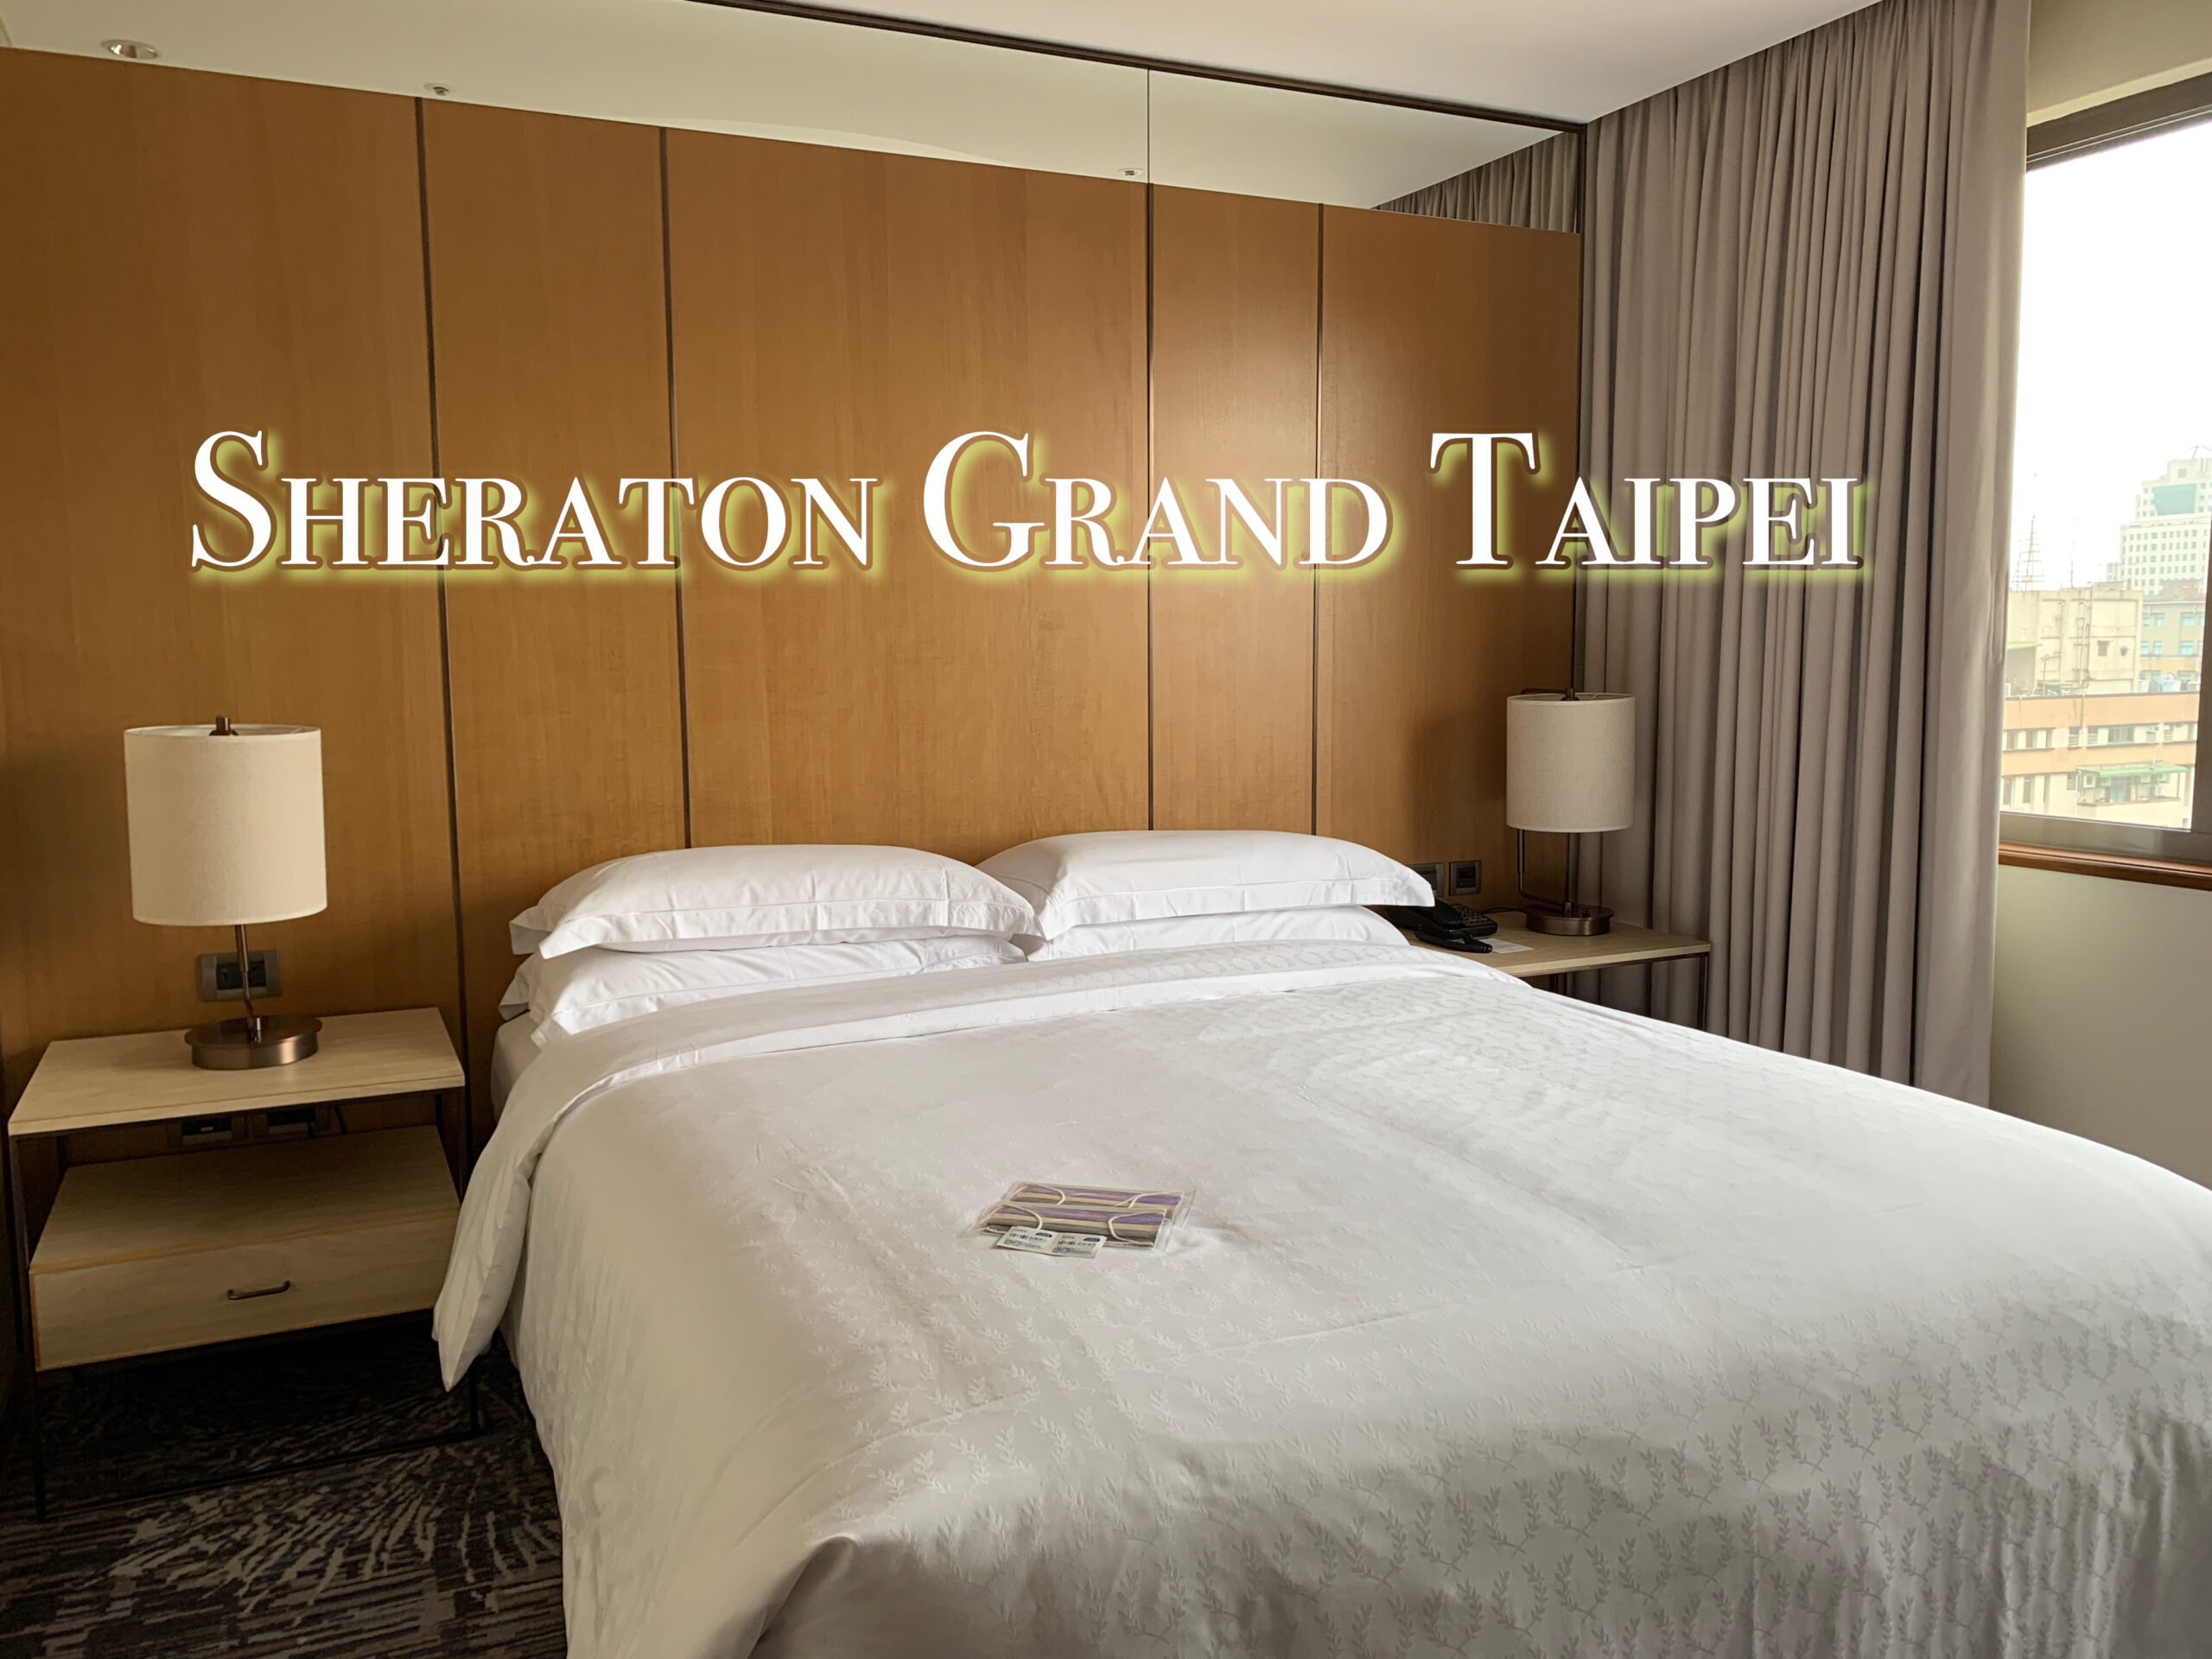 Sheraton Grand Taipei Hotel Review